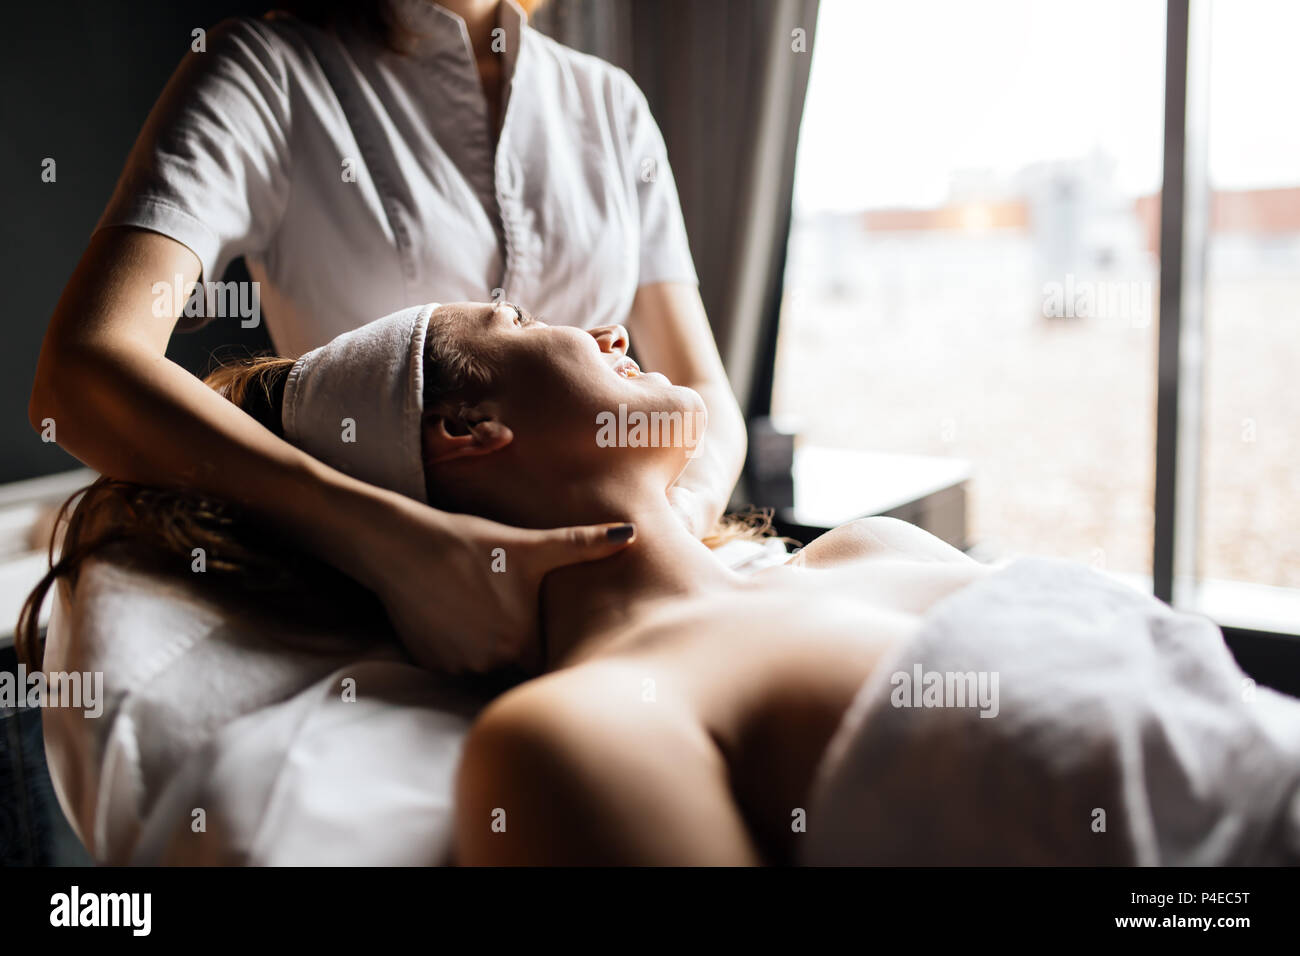 Massage therapist massaging woman Banque D'Images